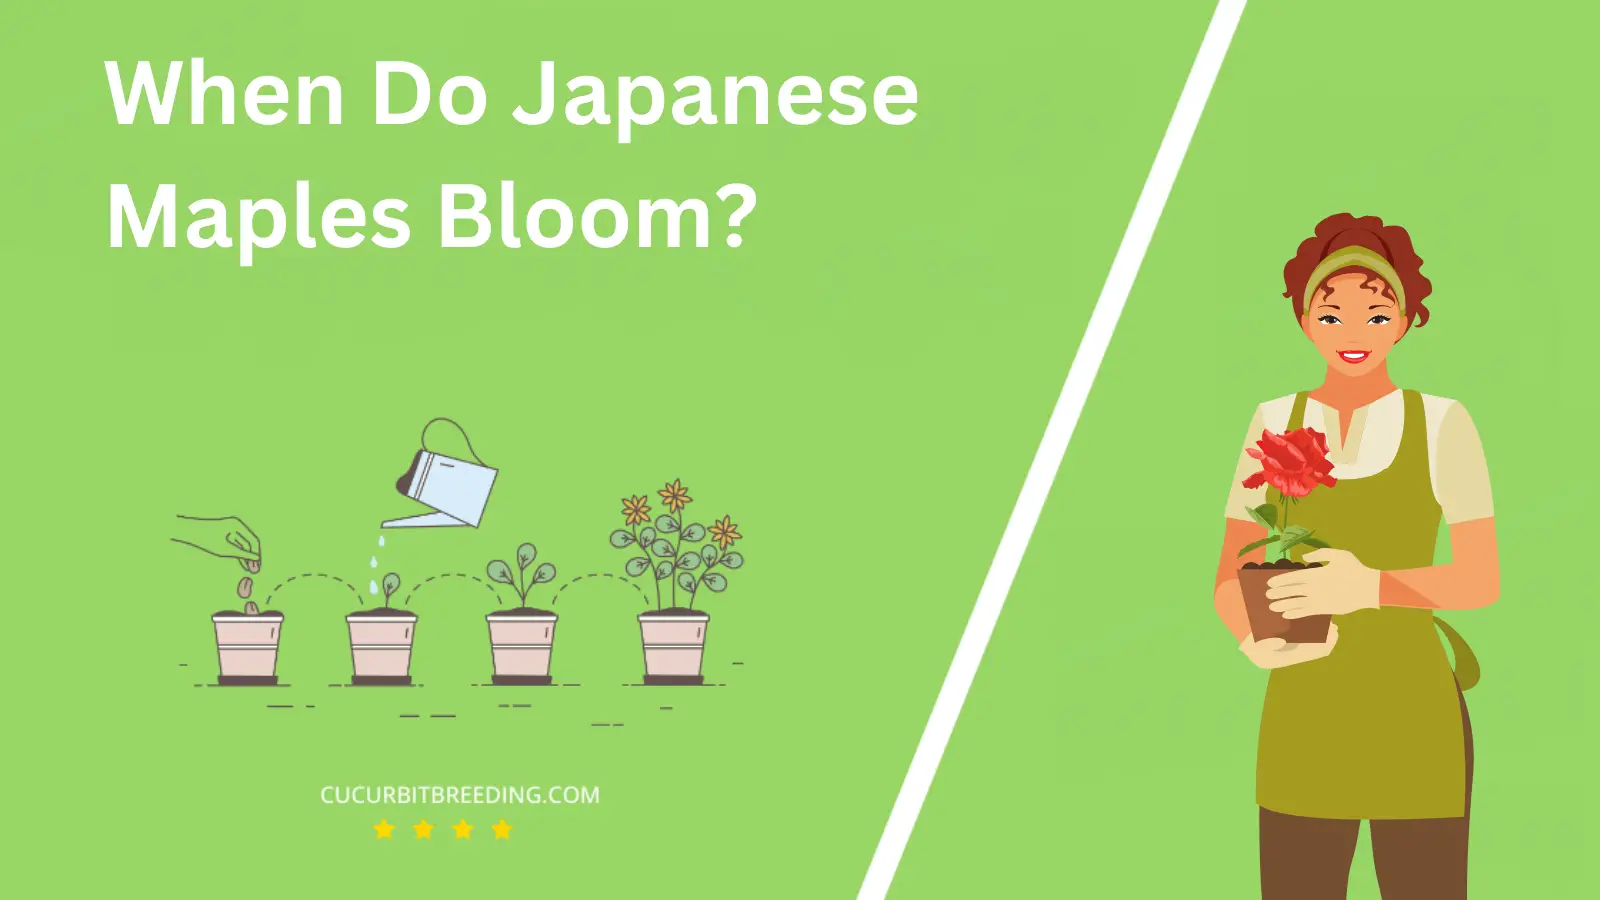 When Do Japanese Maples Bloom?